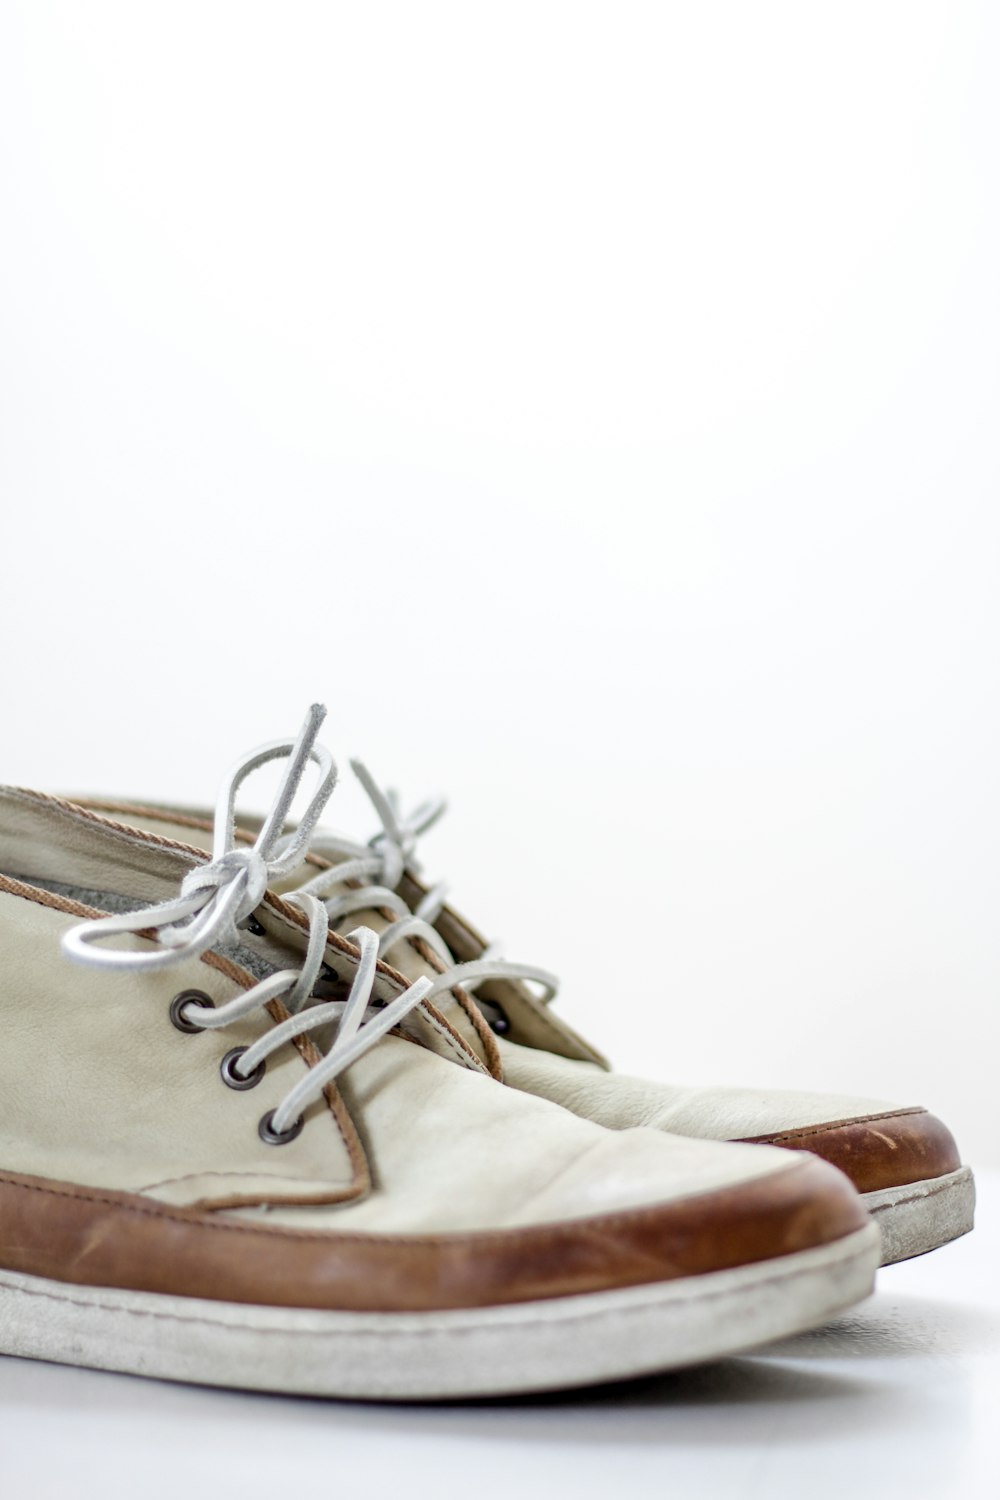 pair of beige chukka boots